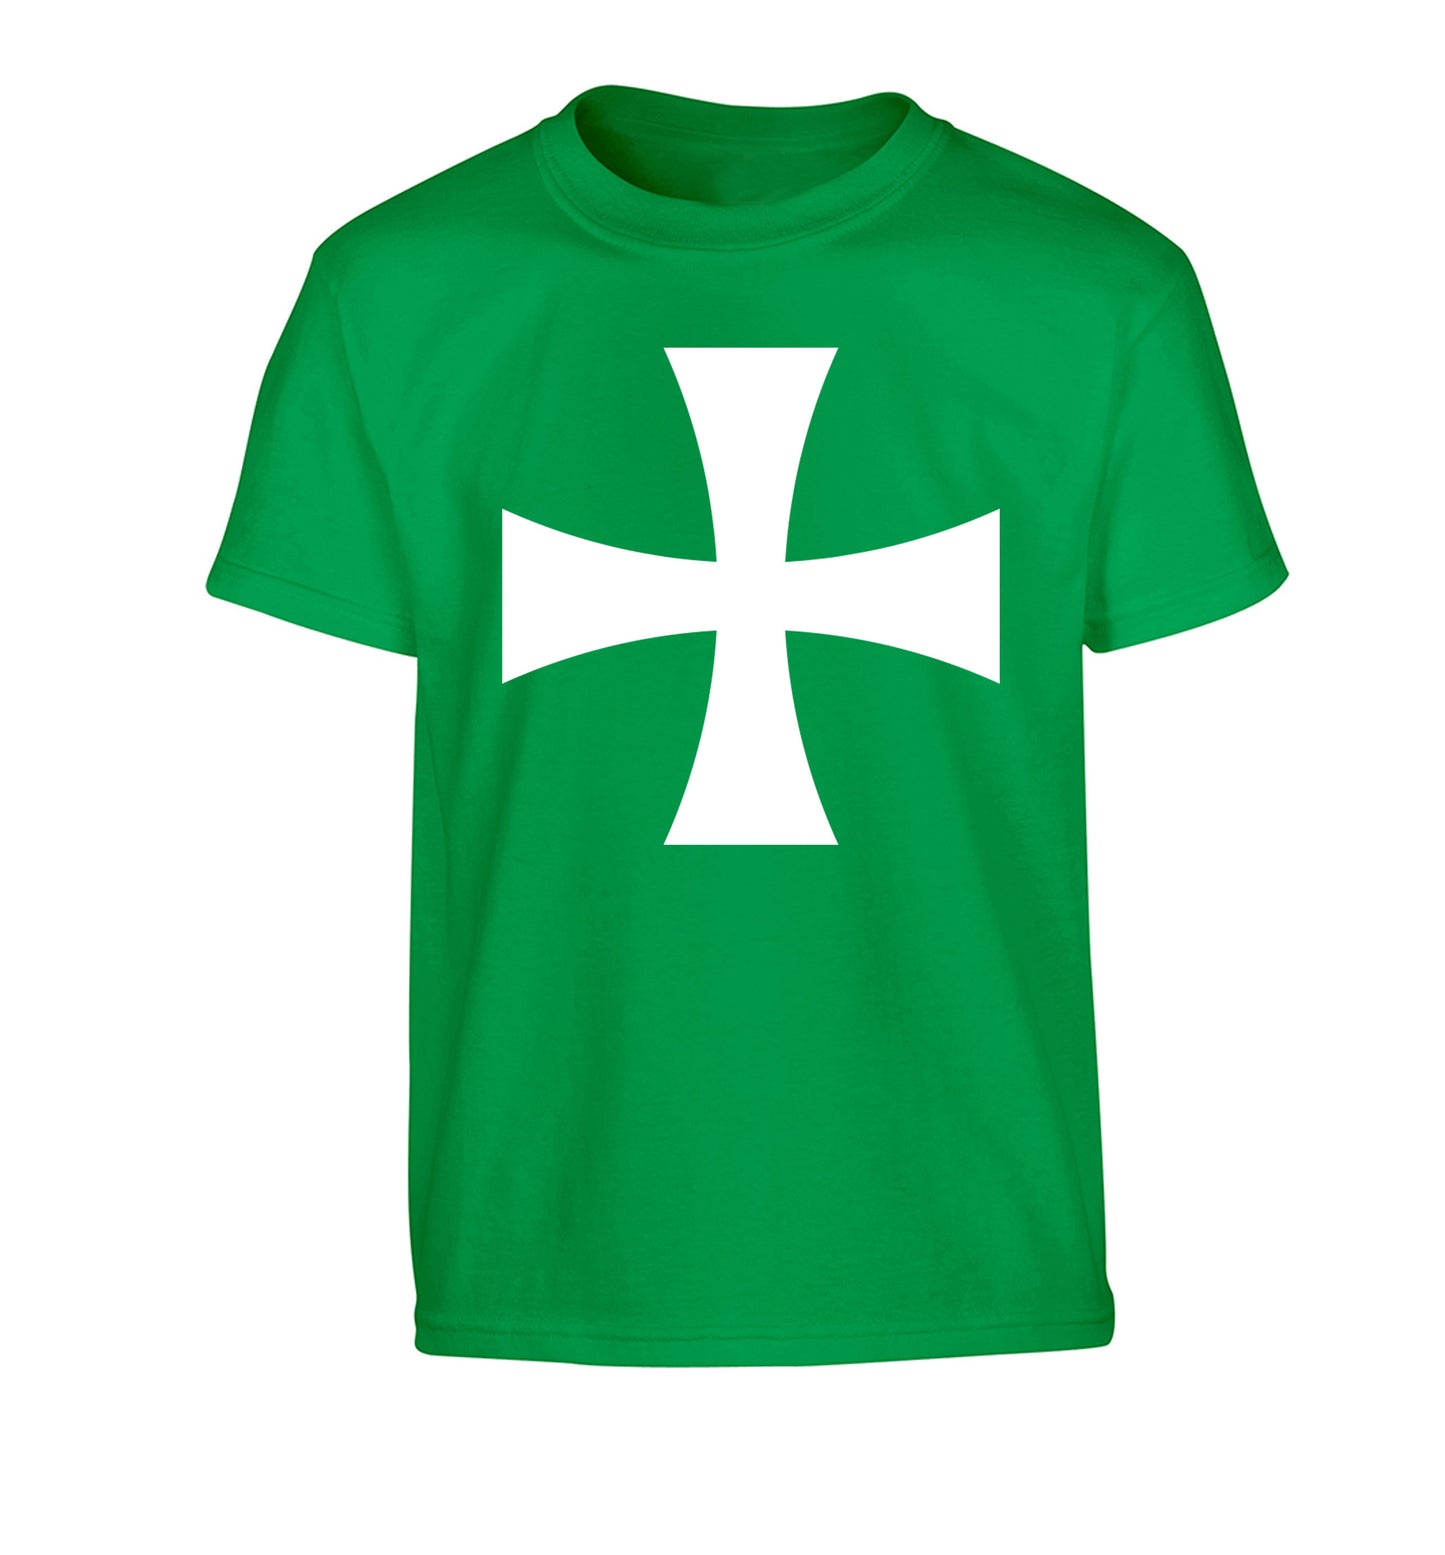 Knights Templar cross Children's green Tshirt 12-14 Years